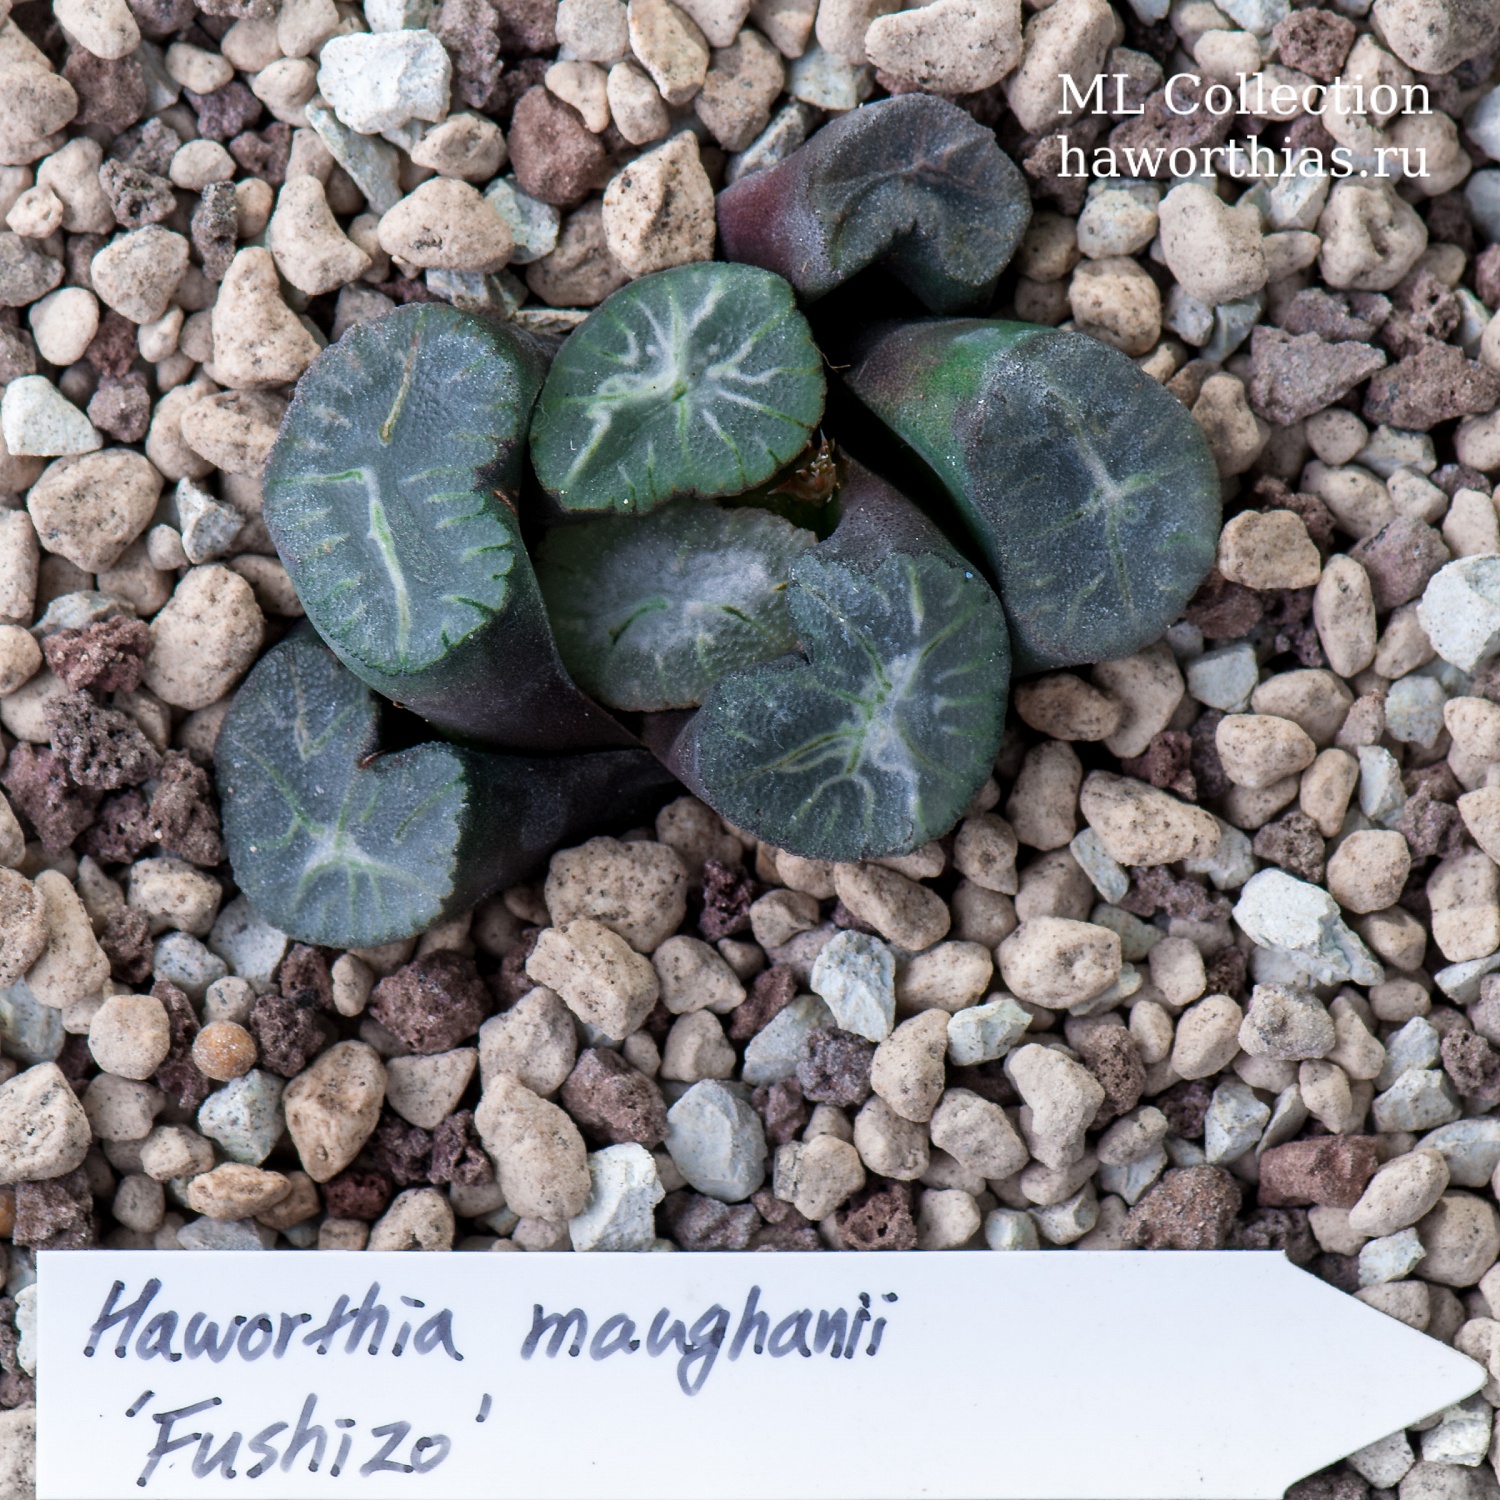 Haworthia maughanii